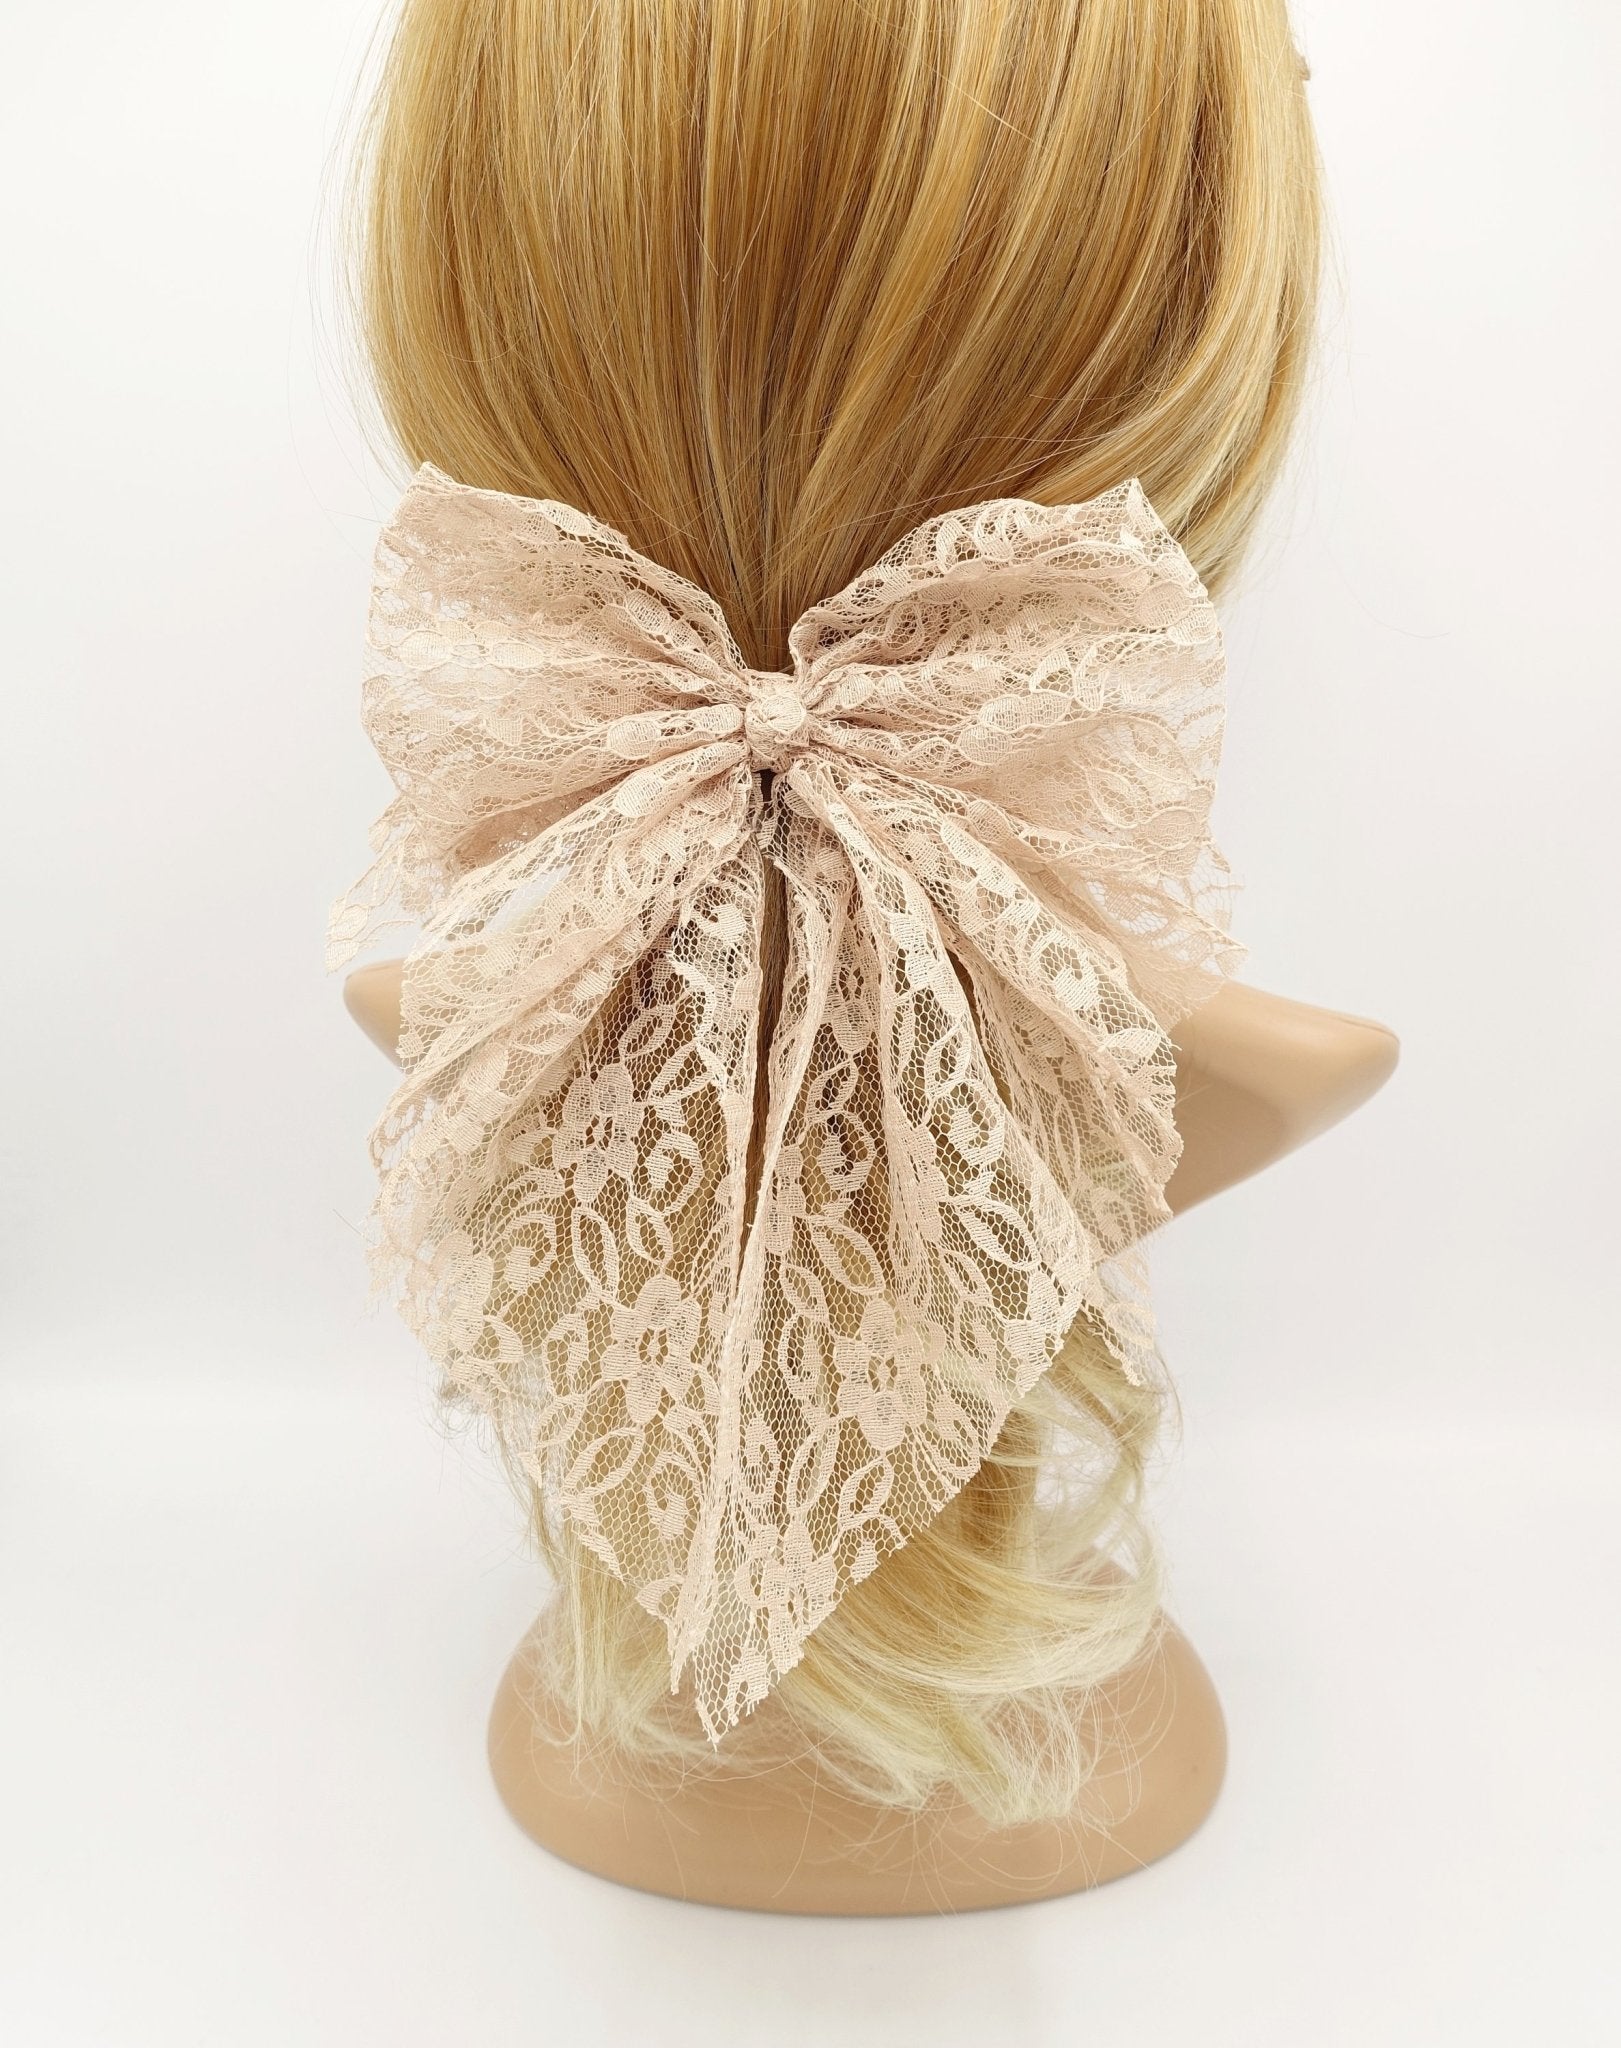 VeryShine claw/banana/barrette Beige lace hair bow feminine styles hair accessory for woman